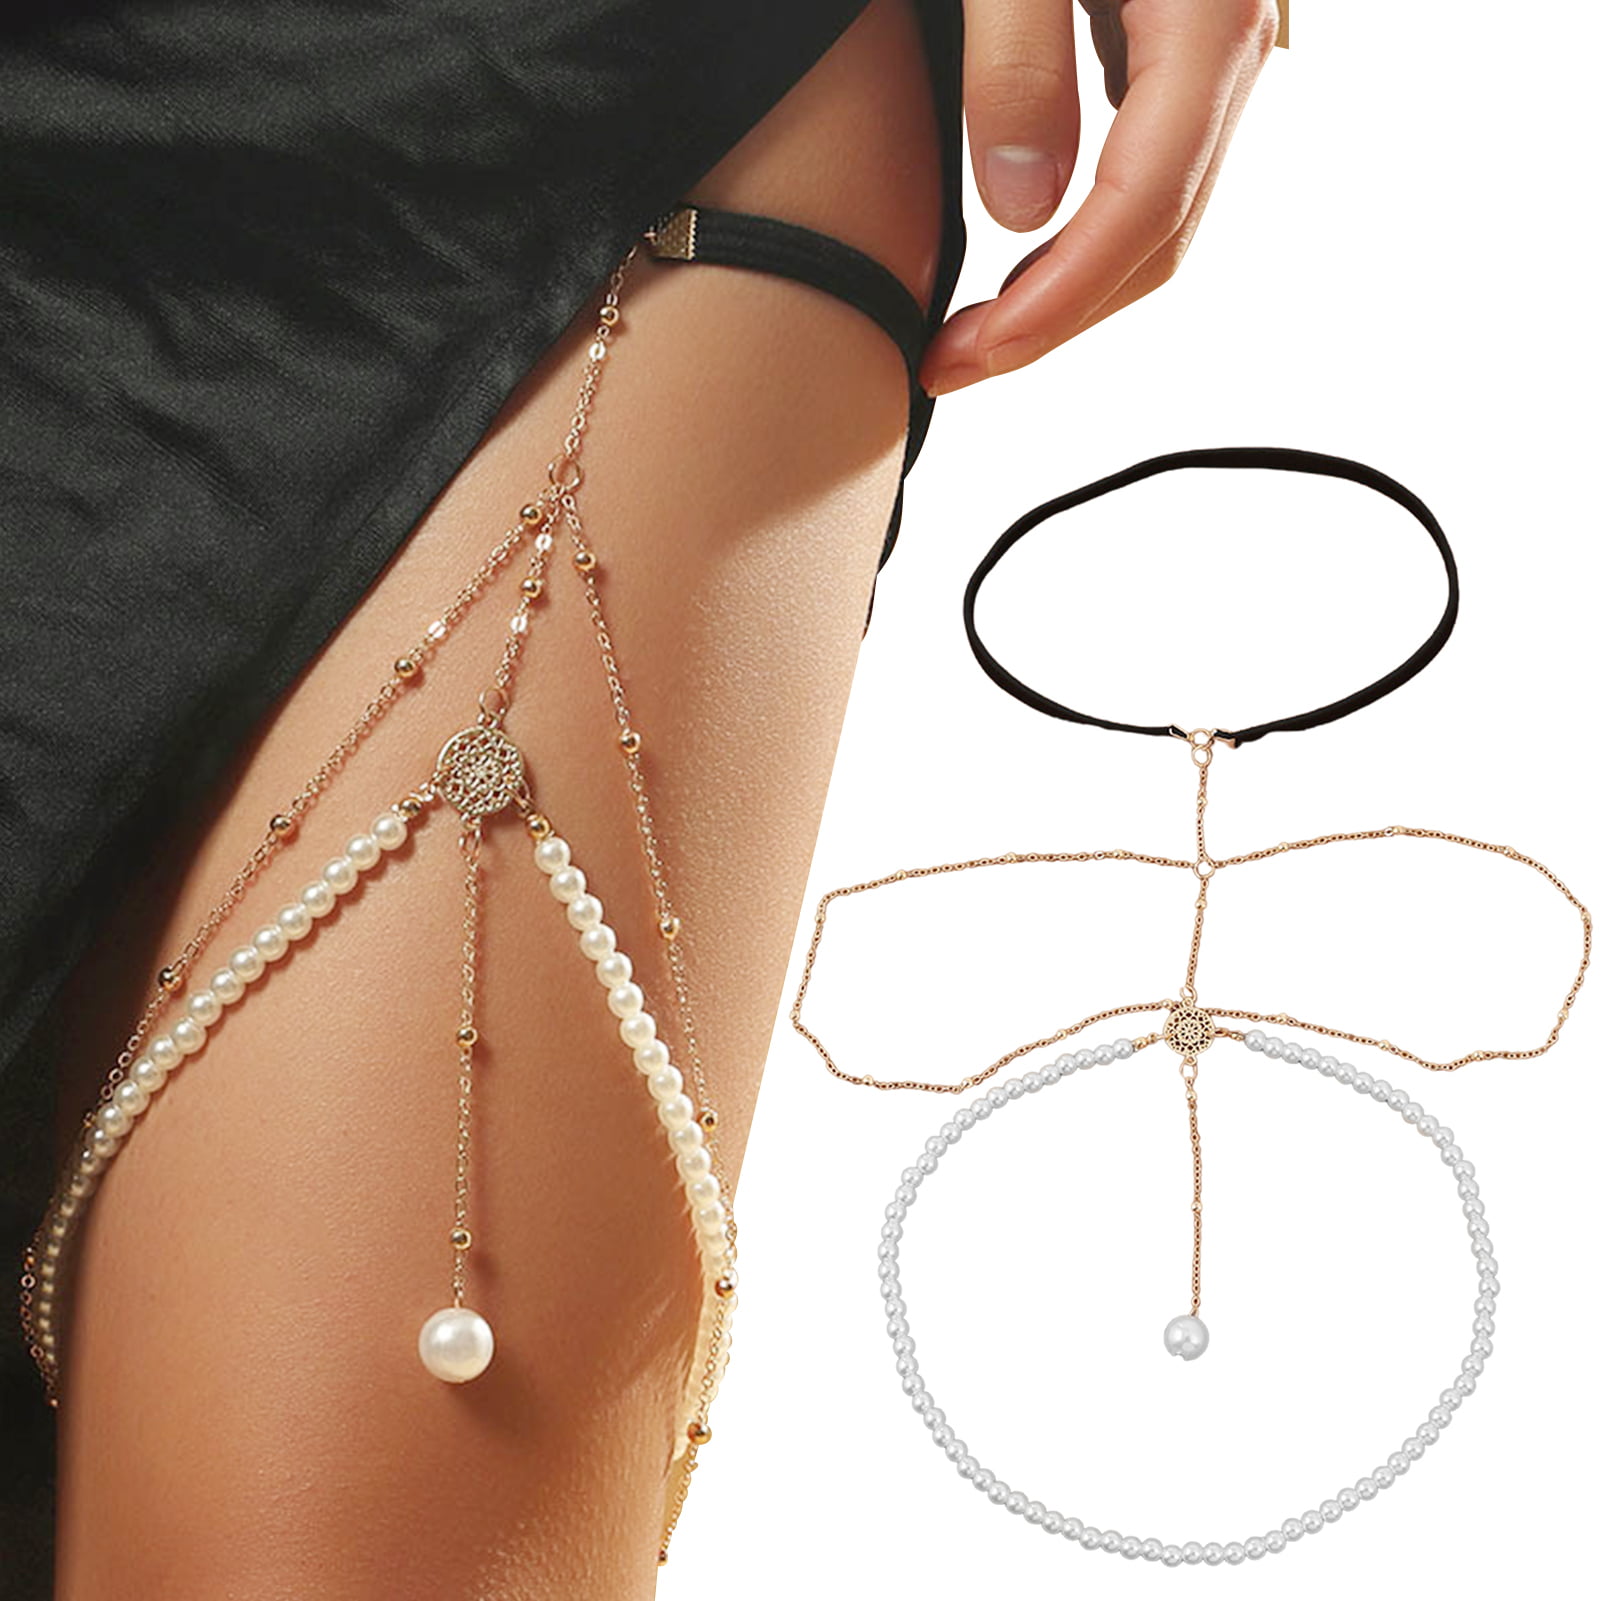 Beach Jewelry Leg Chains Body Pendant Body Jewelry Body Jewelry Accessories for Women Full Body Pendant Legs